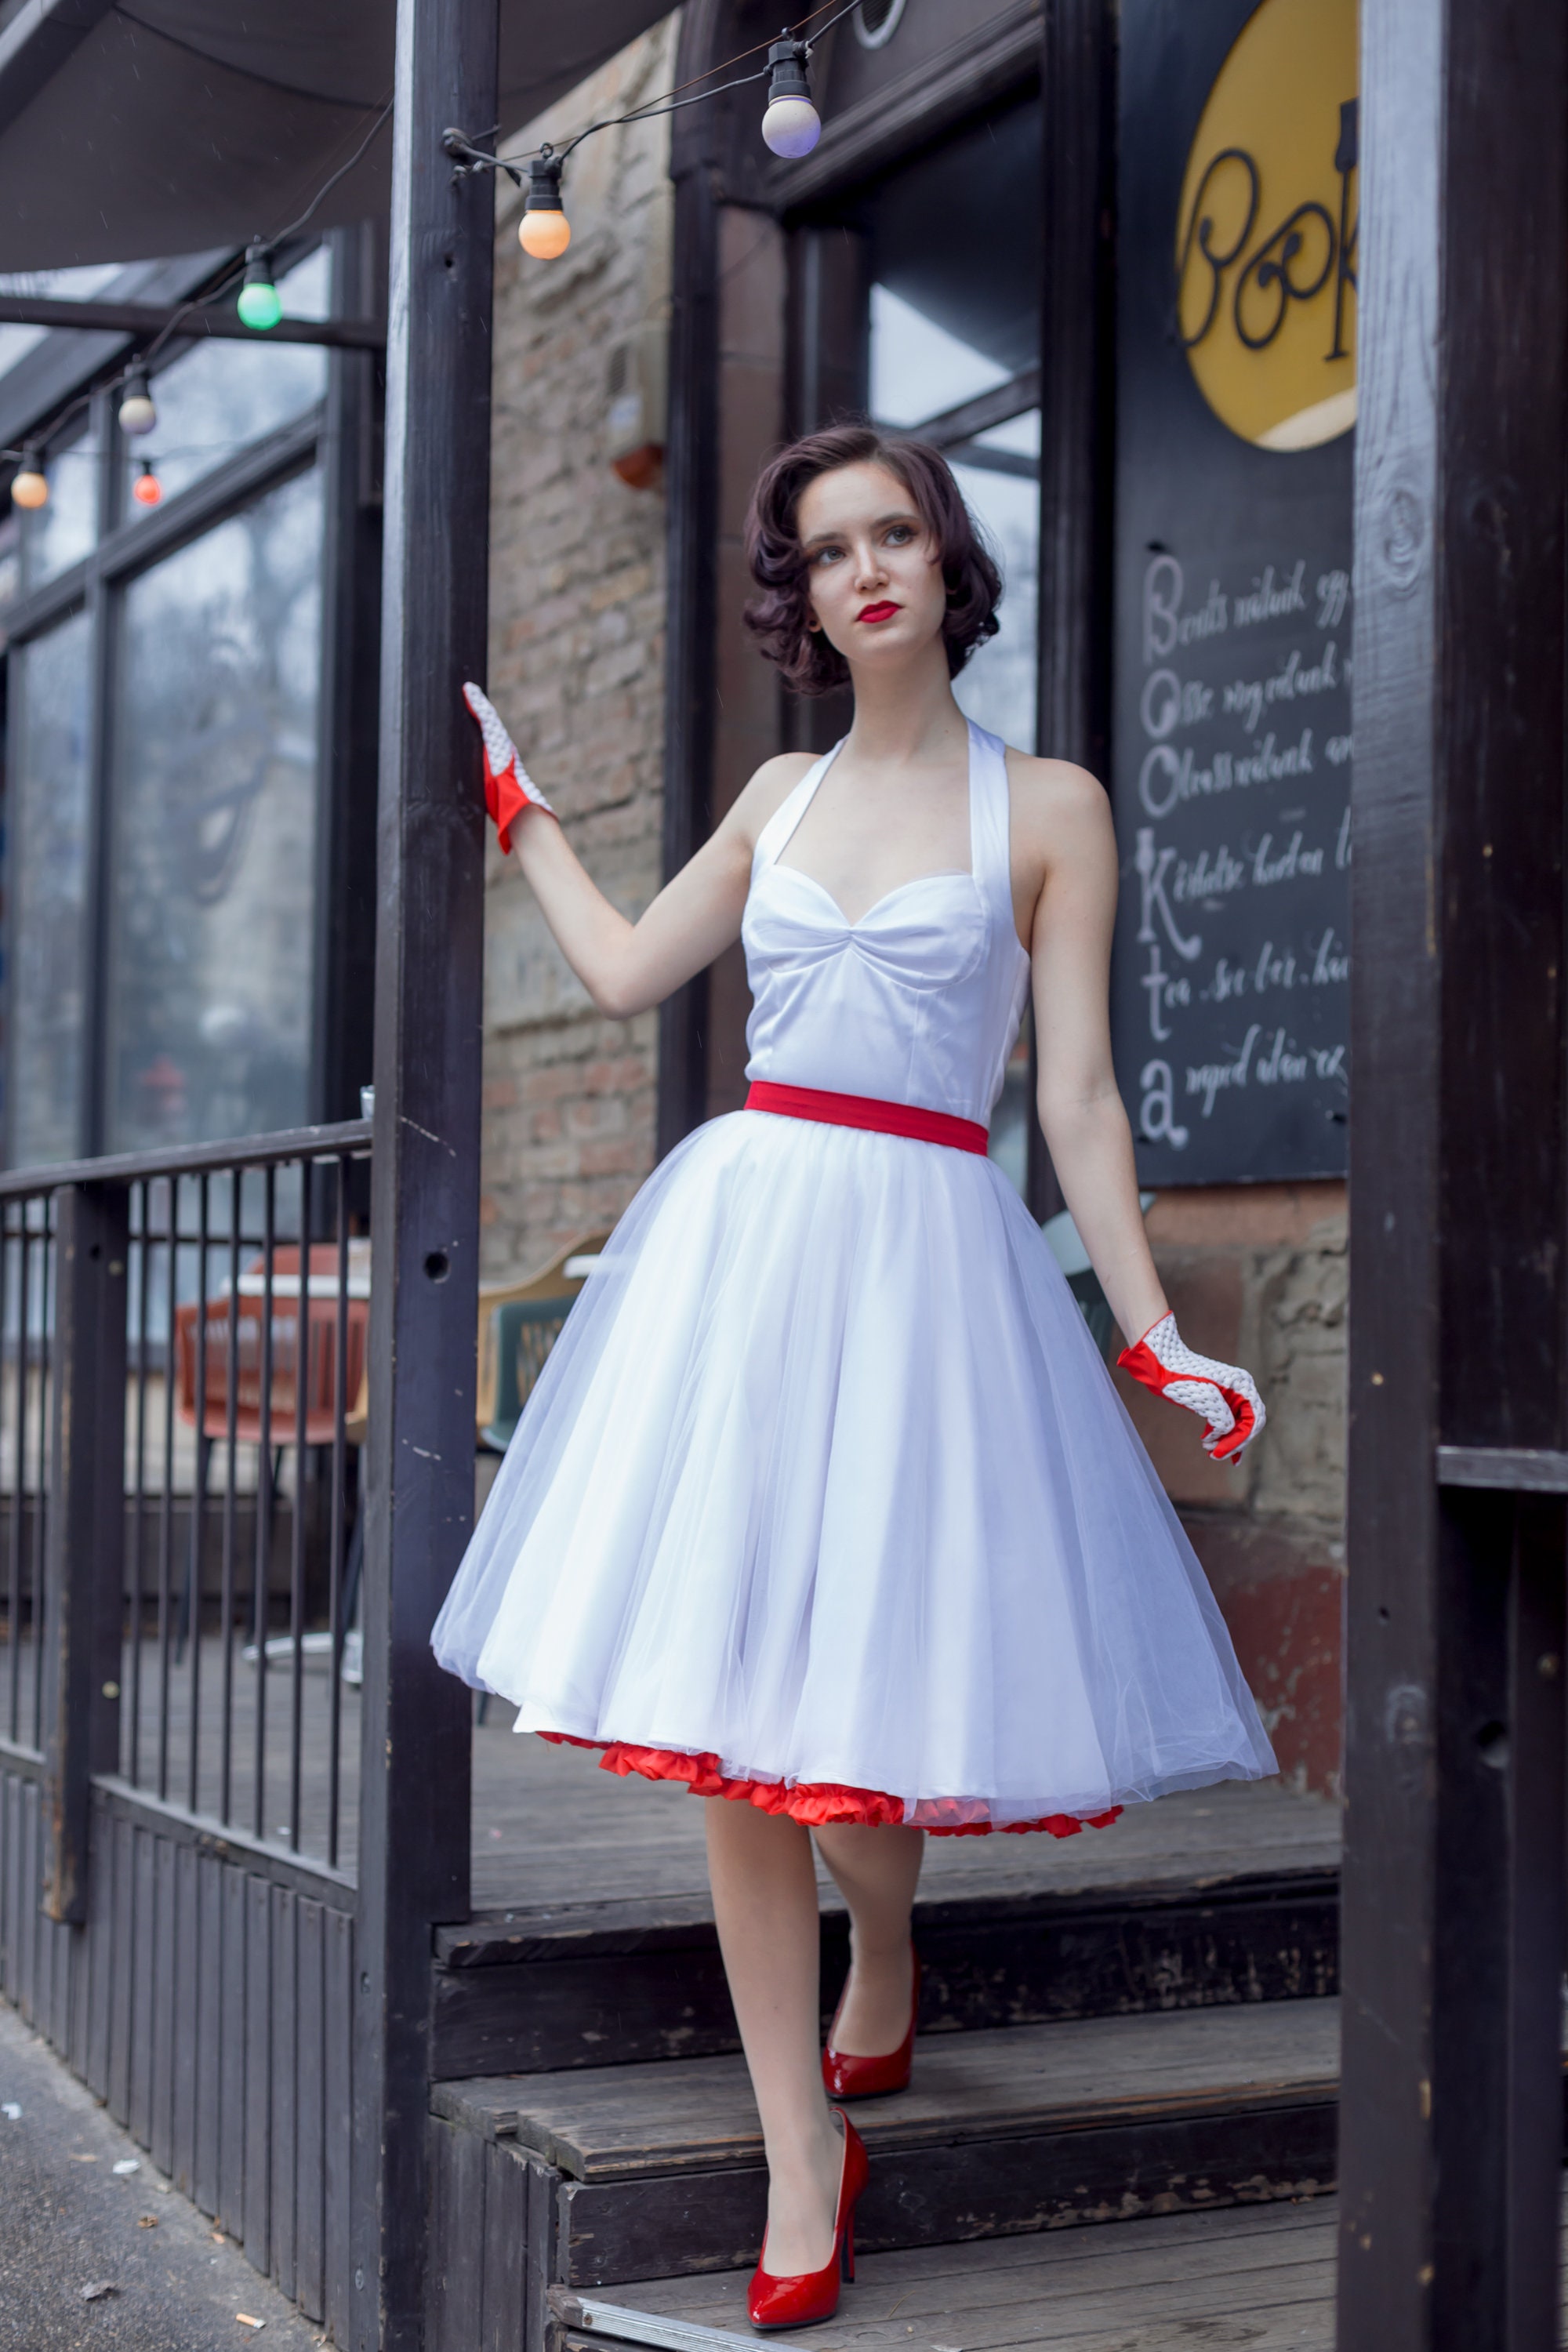 Shannon Wedding Dress: Vintage Style / Pin-up / Rockabilly Knee-high Bride  Dress by Ticci Rockabilly Clothing -  Canada